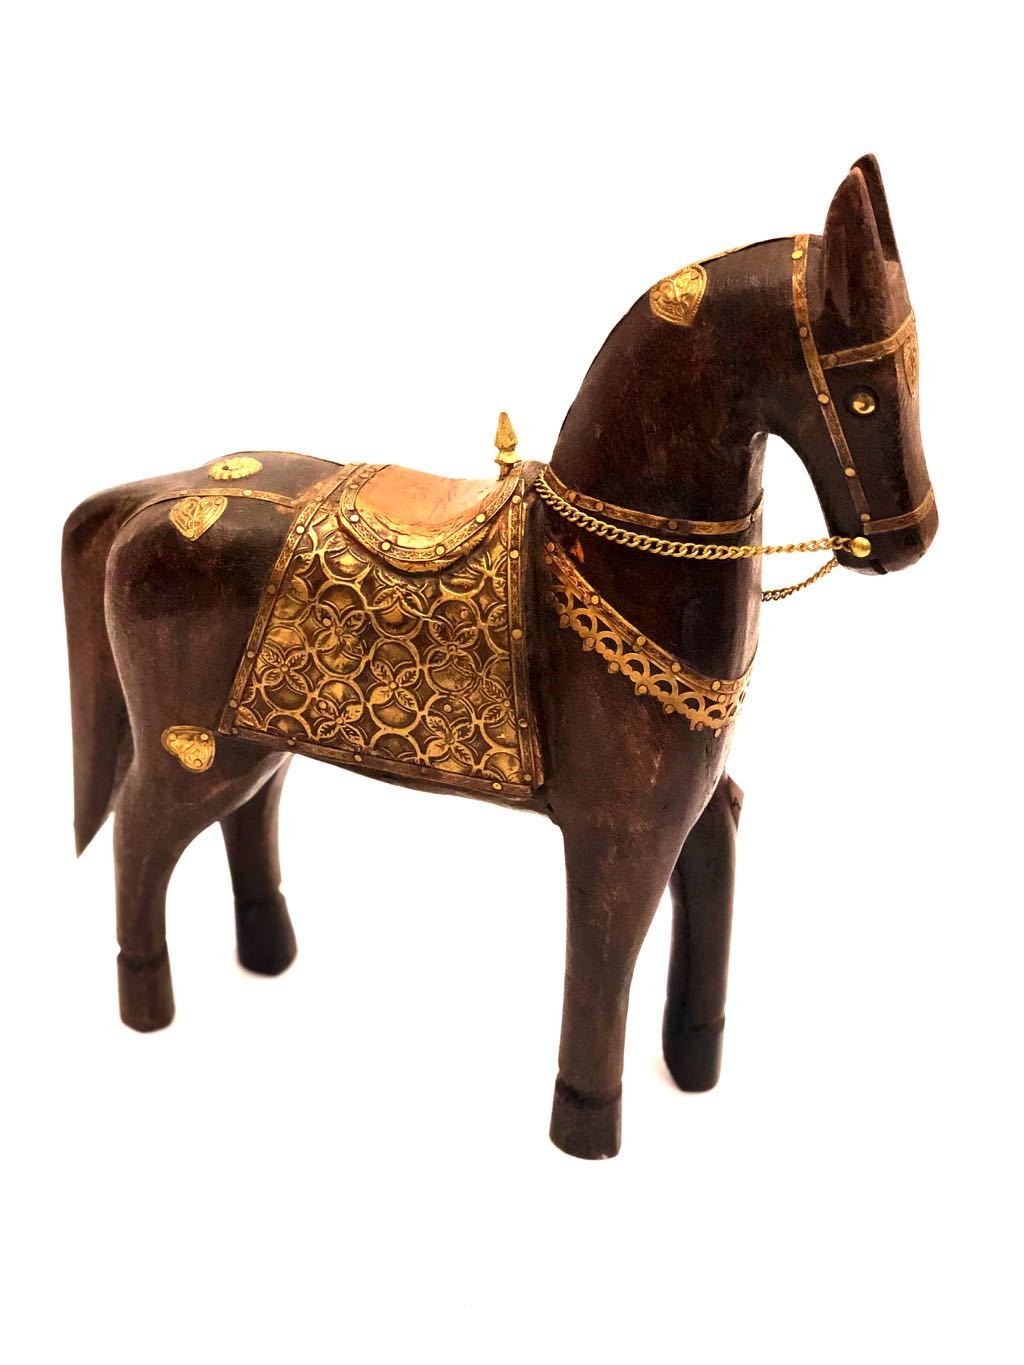 Unparalleled Creation From Indian Artisans Wooden Horse By Tamrapatra - Tanariri Hastakala